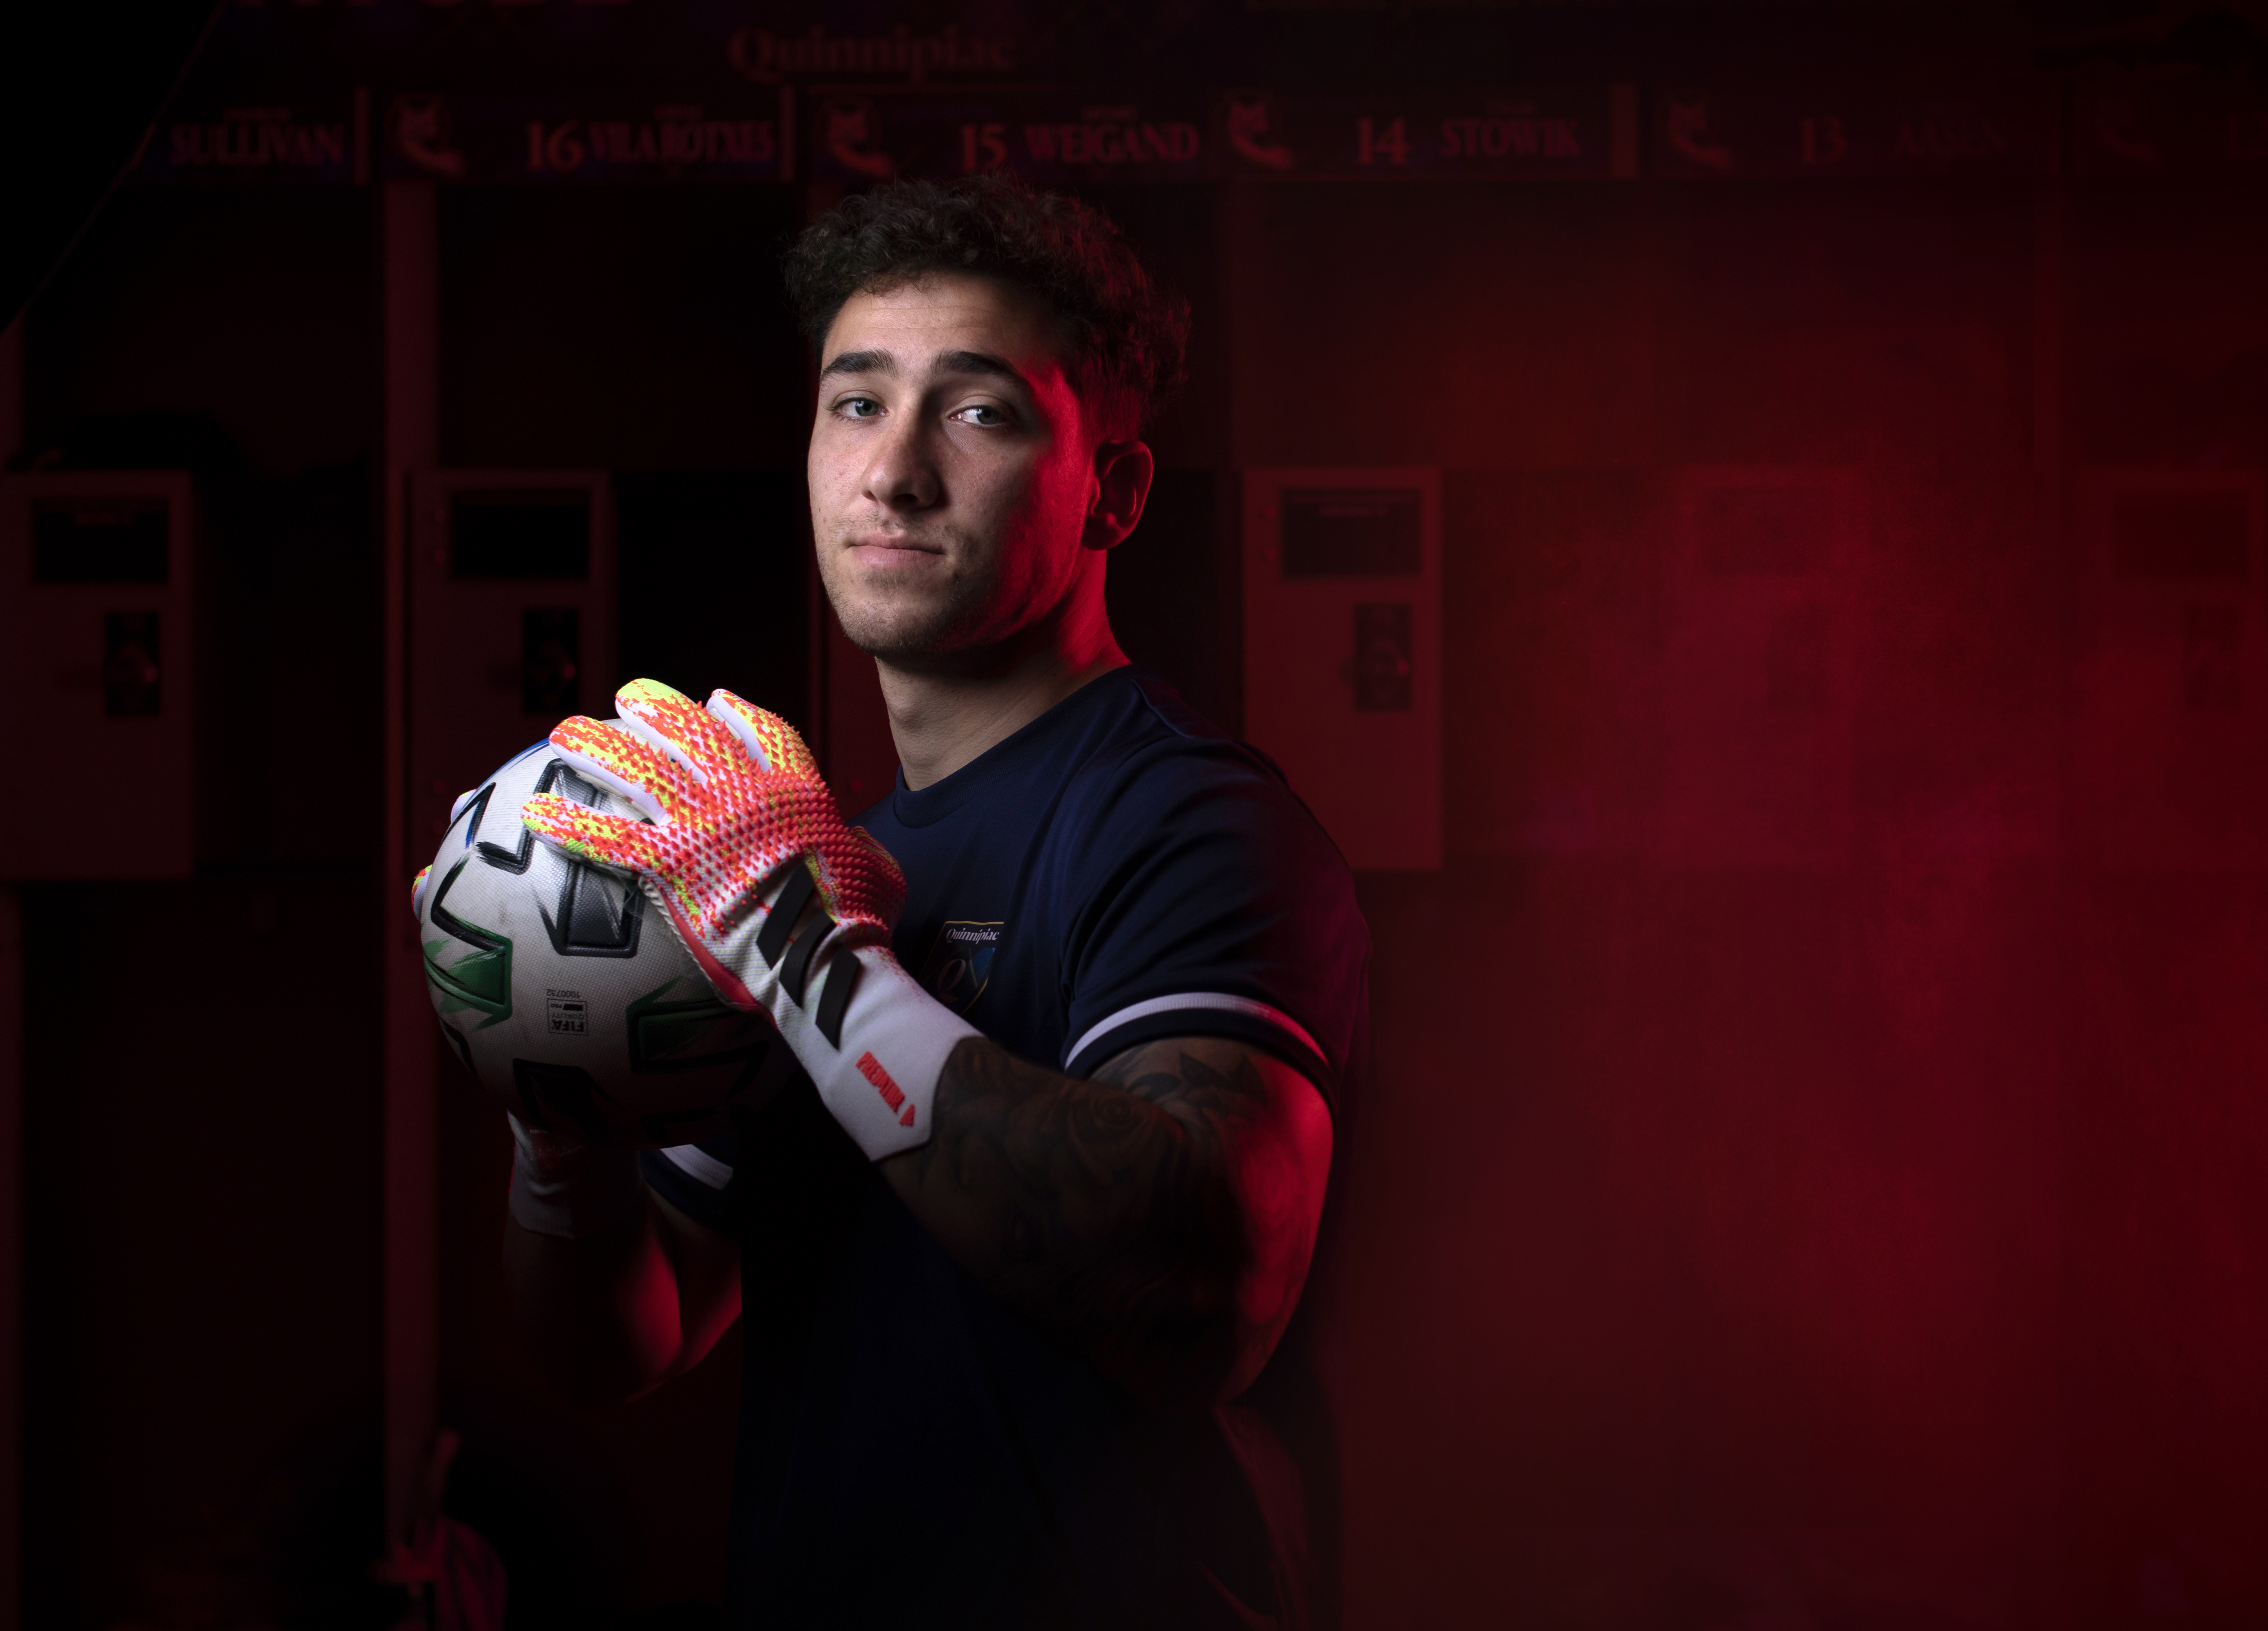 Quinnipiac senior Jared Mazzola, goalkeeper for the men’s soccer team